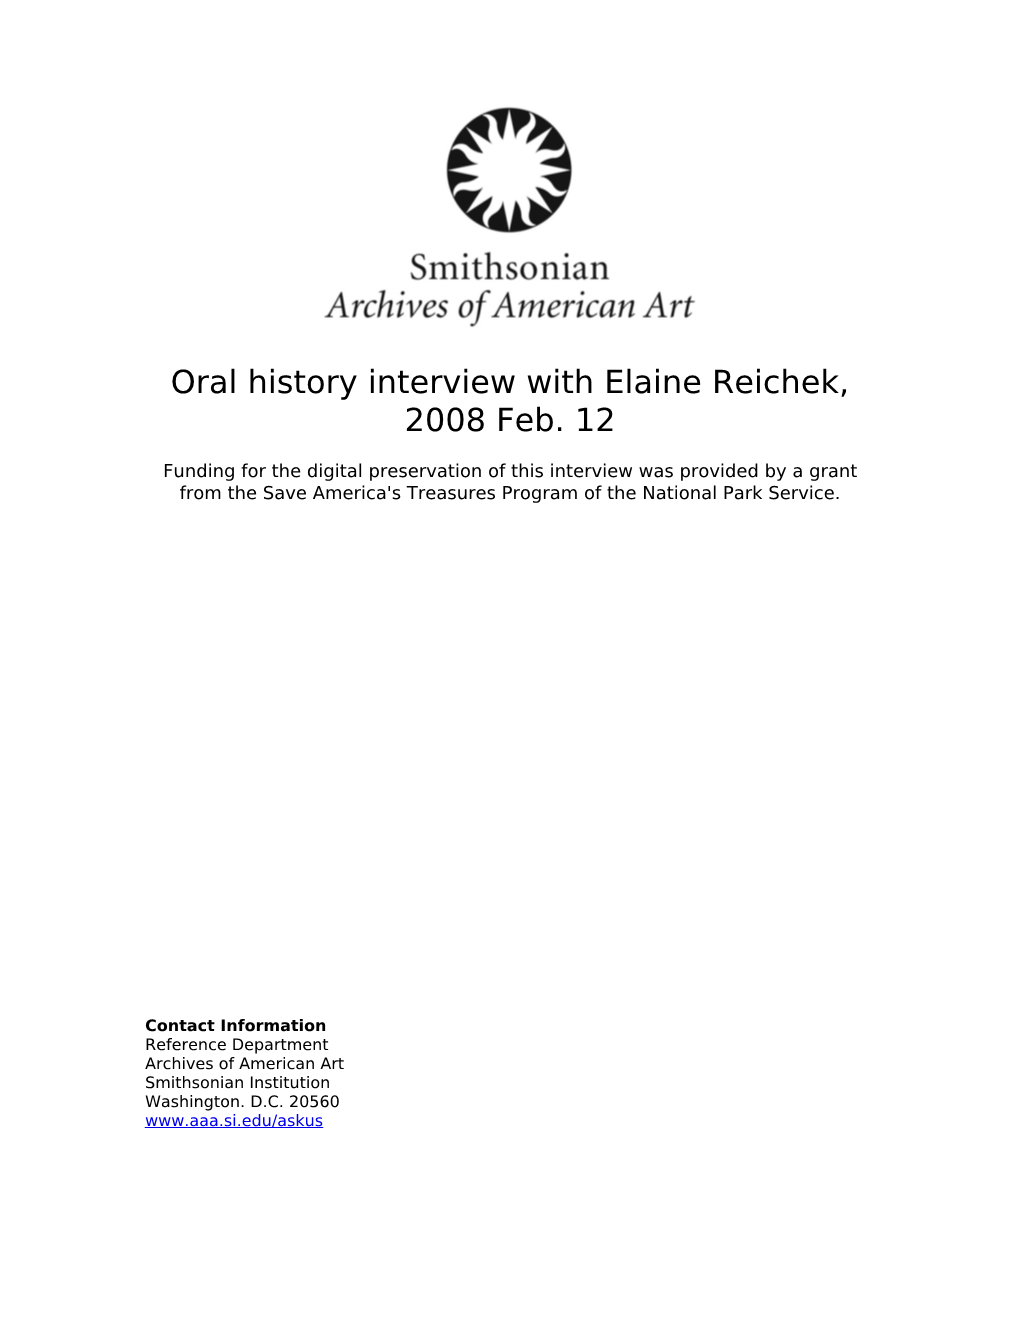 Oral History Interview with Elaine Reichek, 2008 Feb. 12